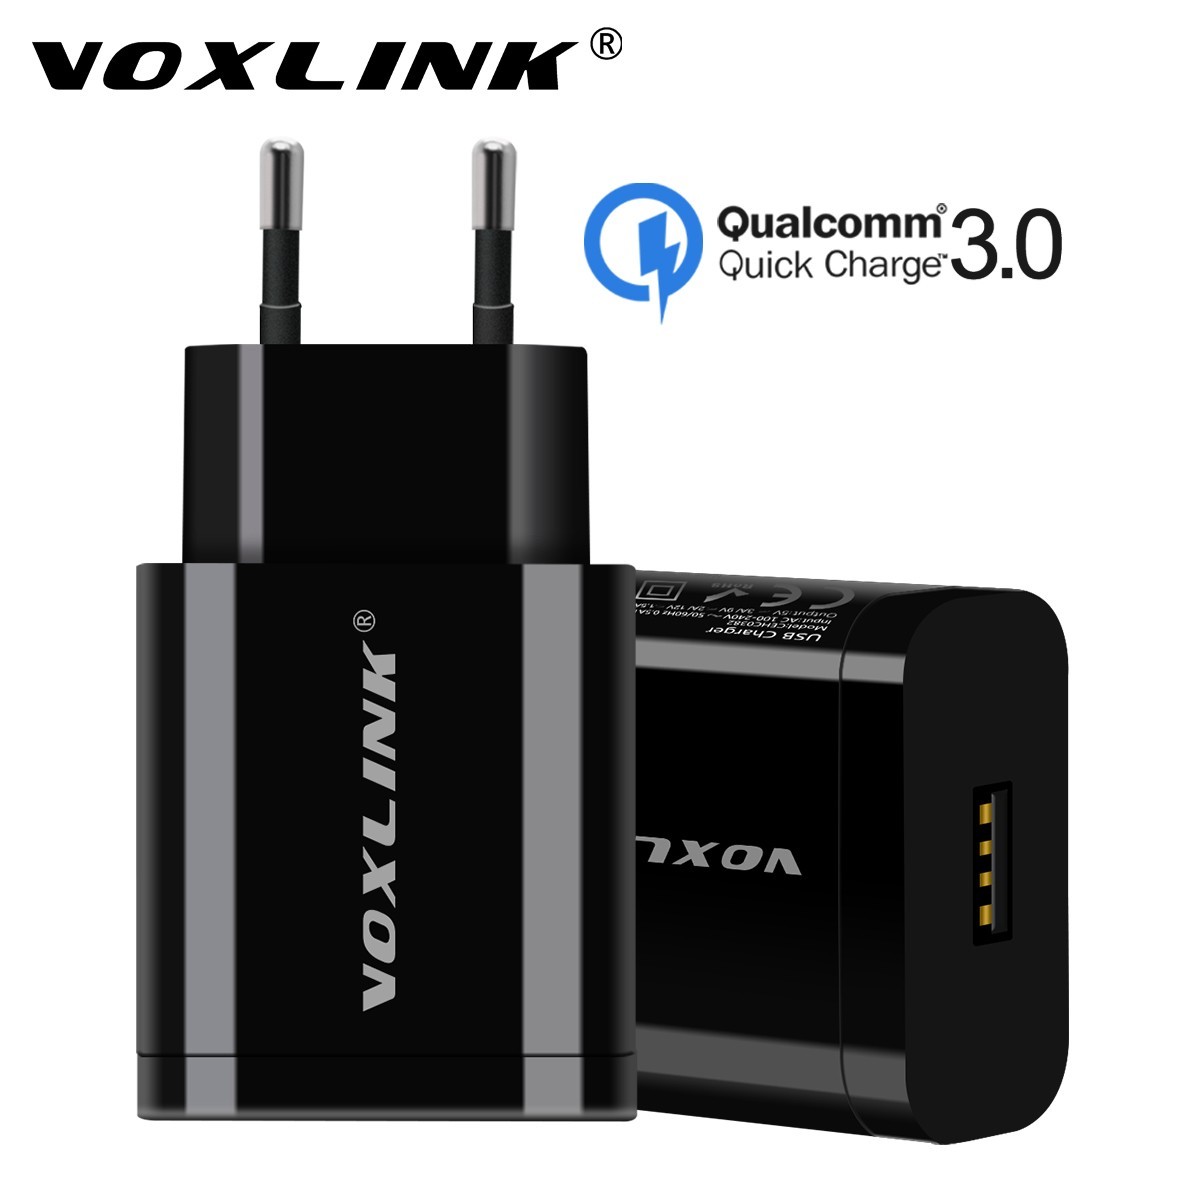 VOXLINK [Qualcomm Quick Charge 3.0 Technology USB Charger, 1-ports USB Travel Adapter Intelligent Charging,EU plug,black